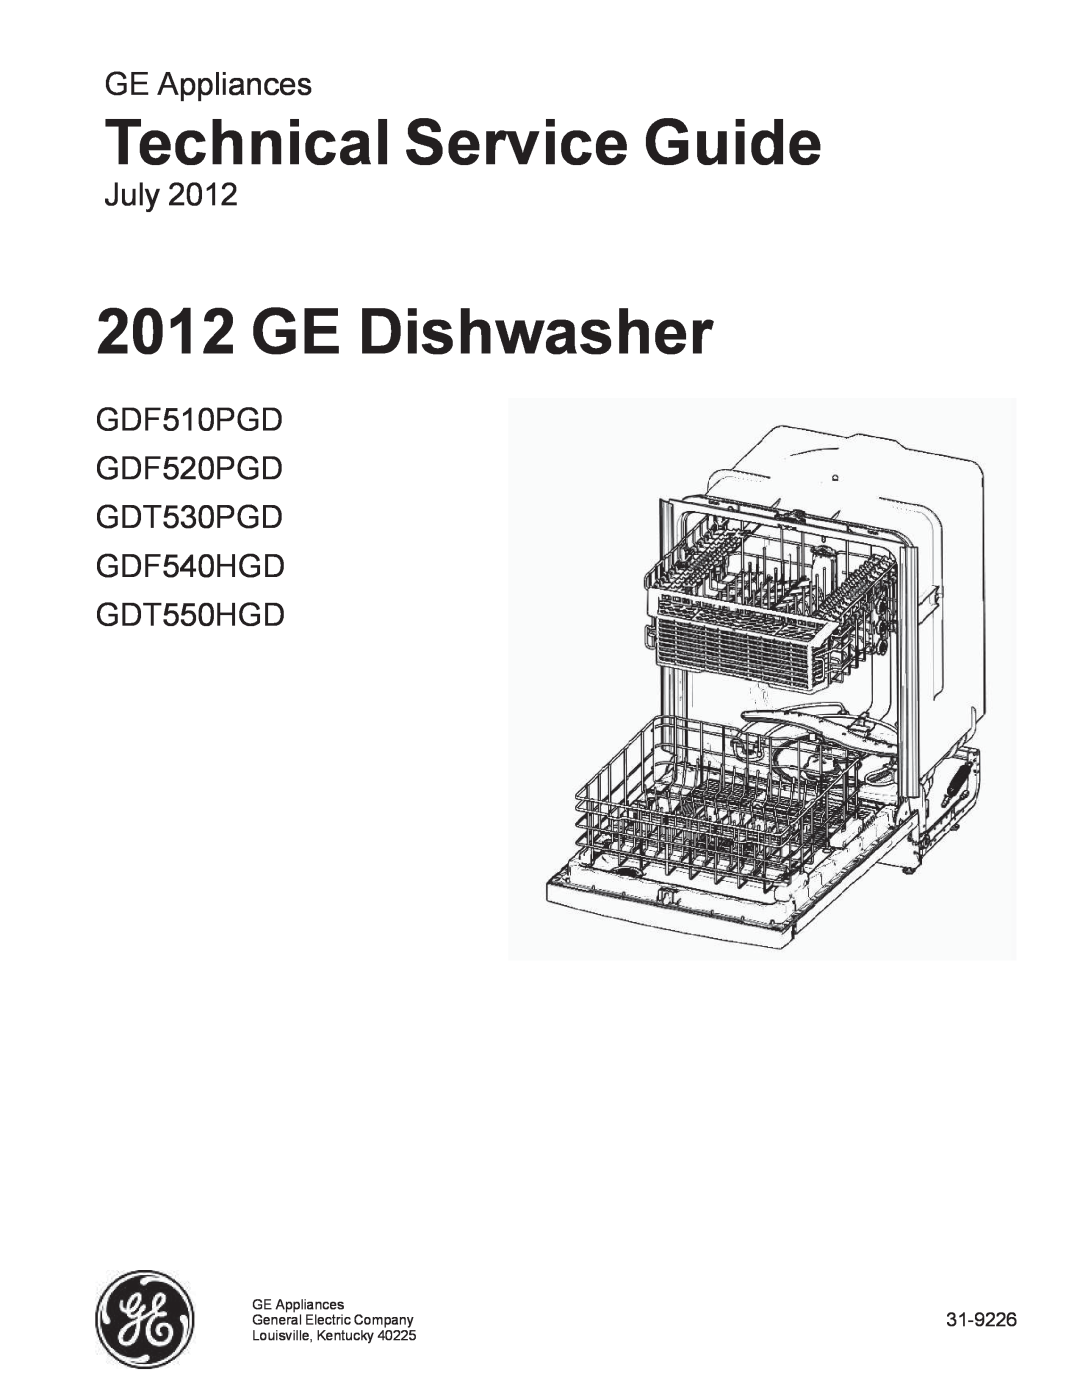 GE GDF510PGD manual Technical Service Guide, GE Dishwasher, $Ssoldqfhv, Xo\ , 3* *3* *73* *+* *7+ 